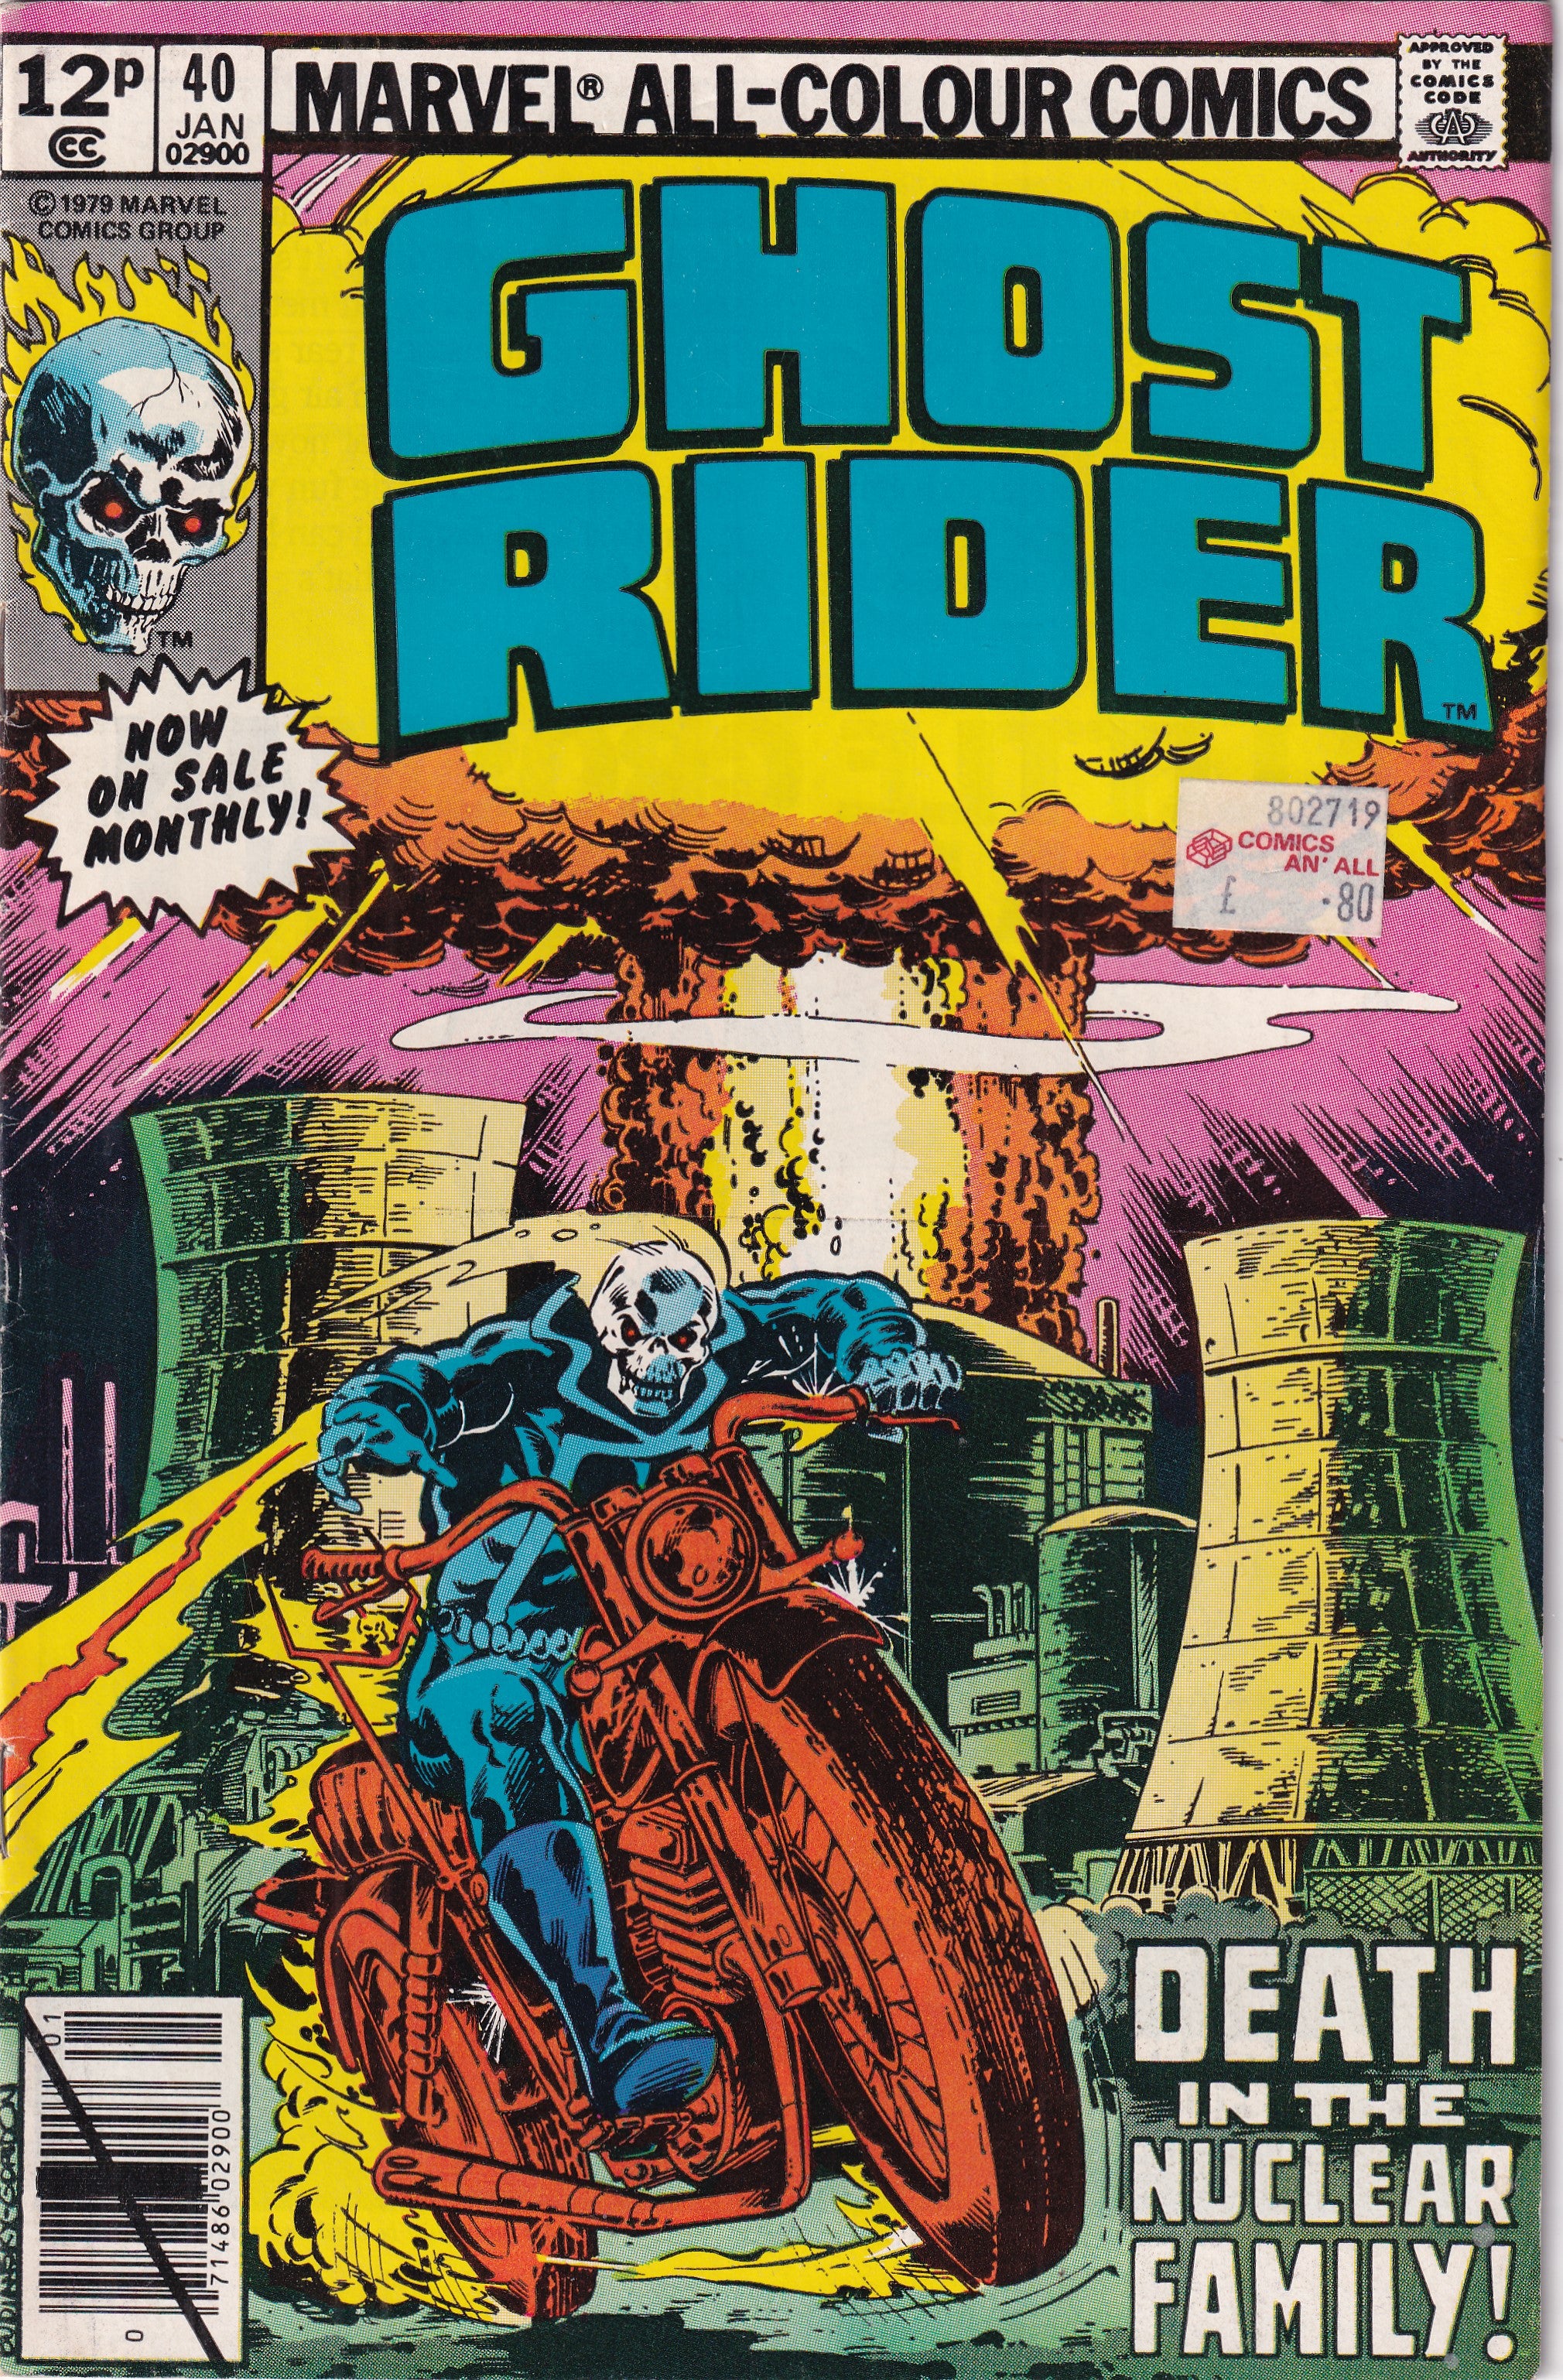 GHOST RIDER #40 - Slab City Comics 